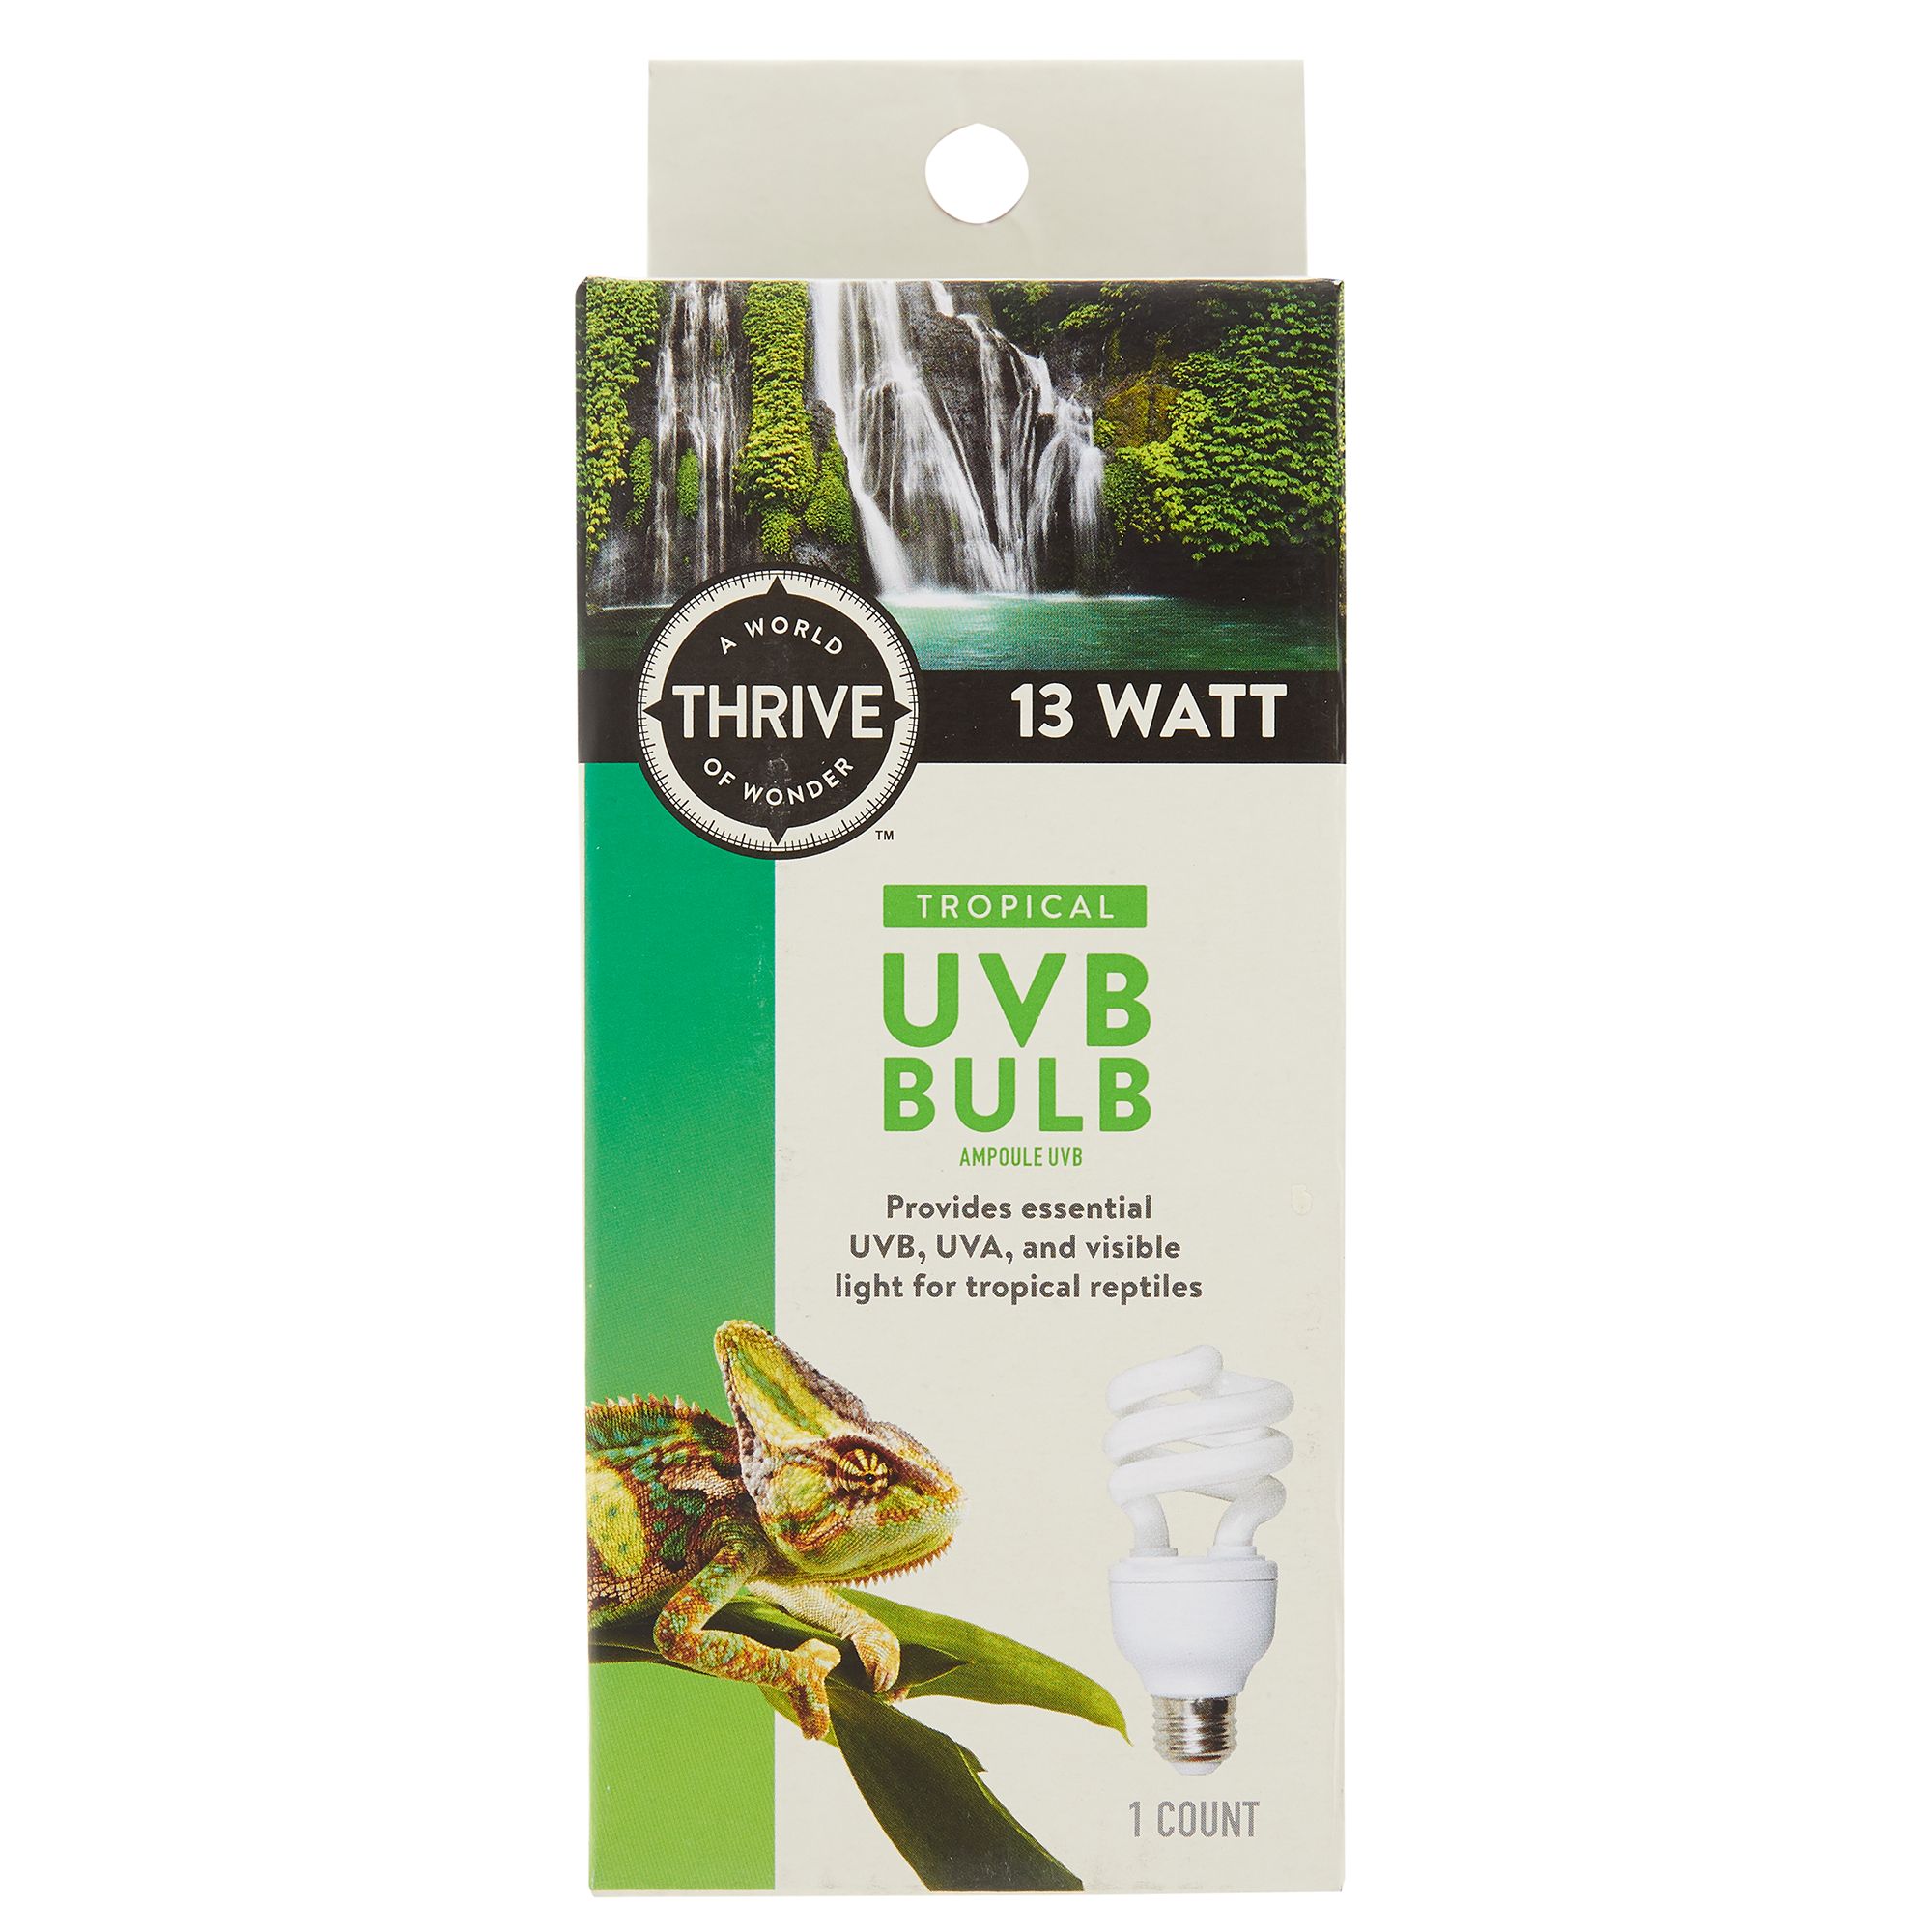 reptile bulbs with uva uvb